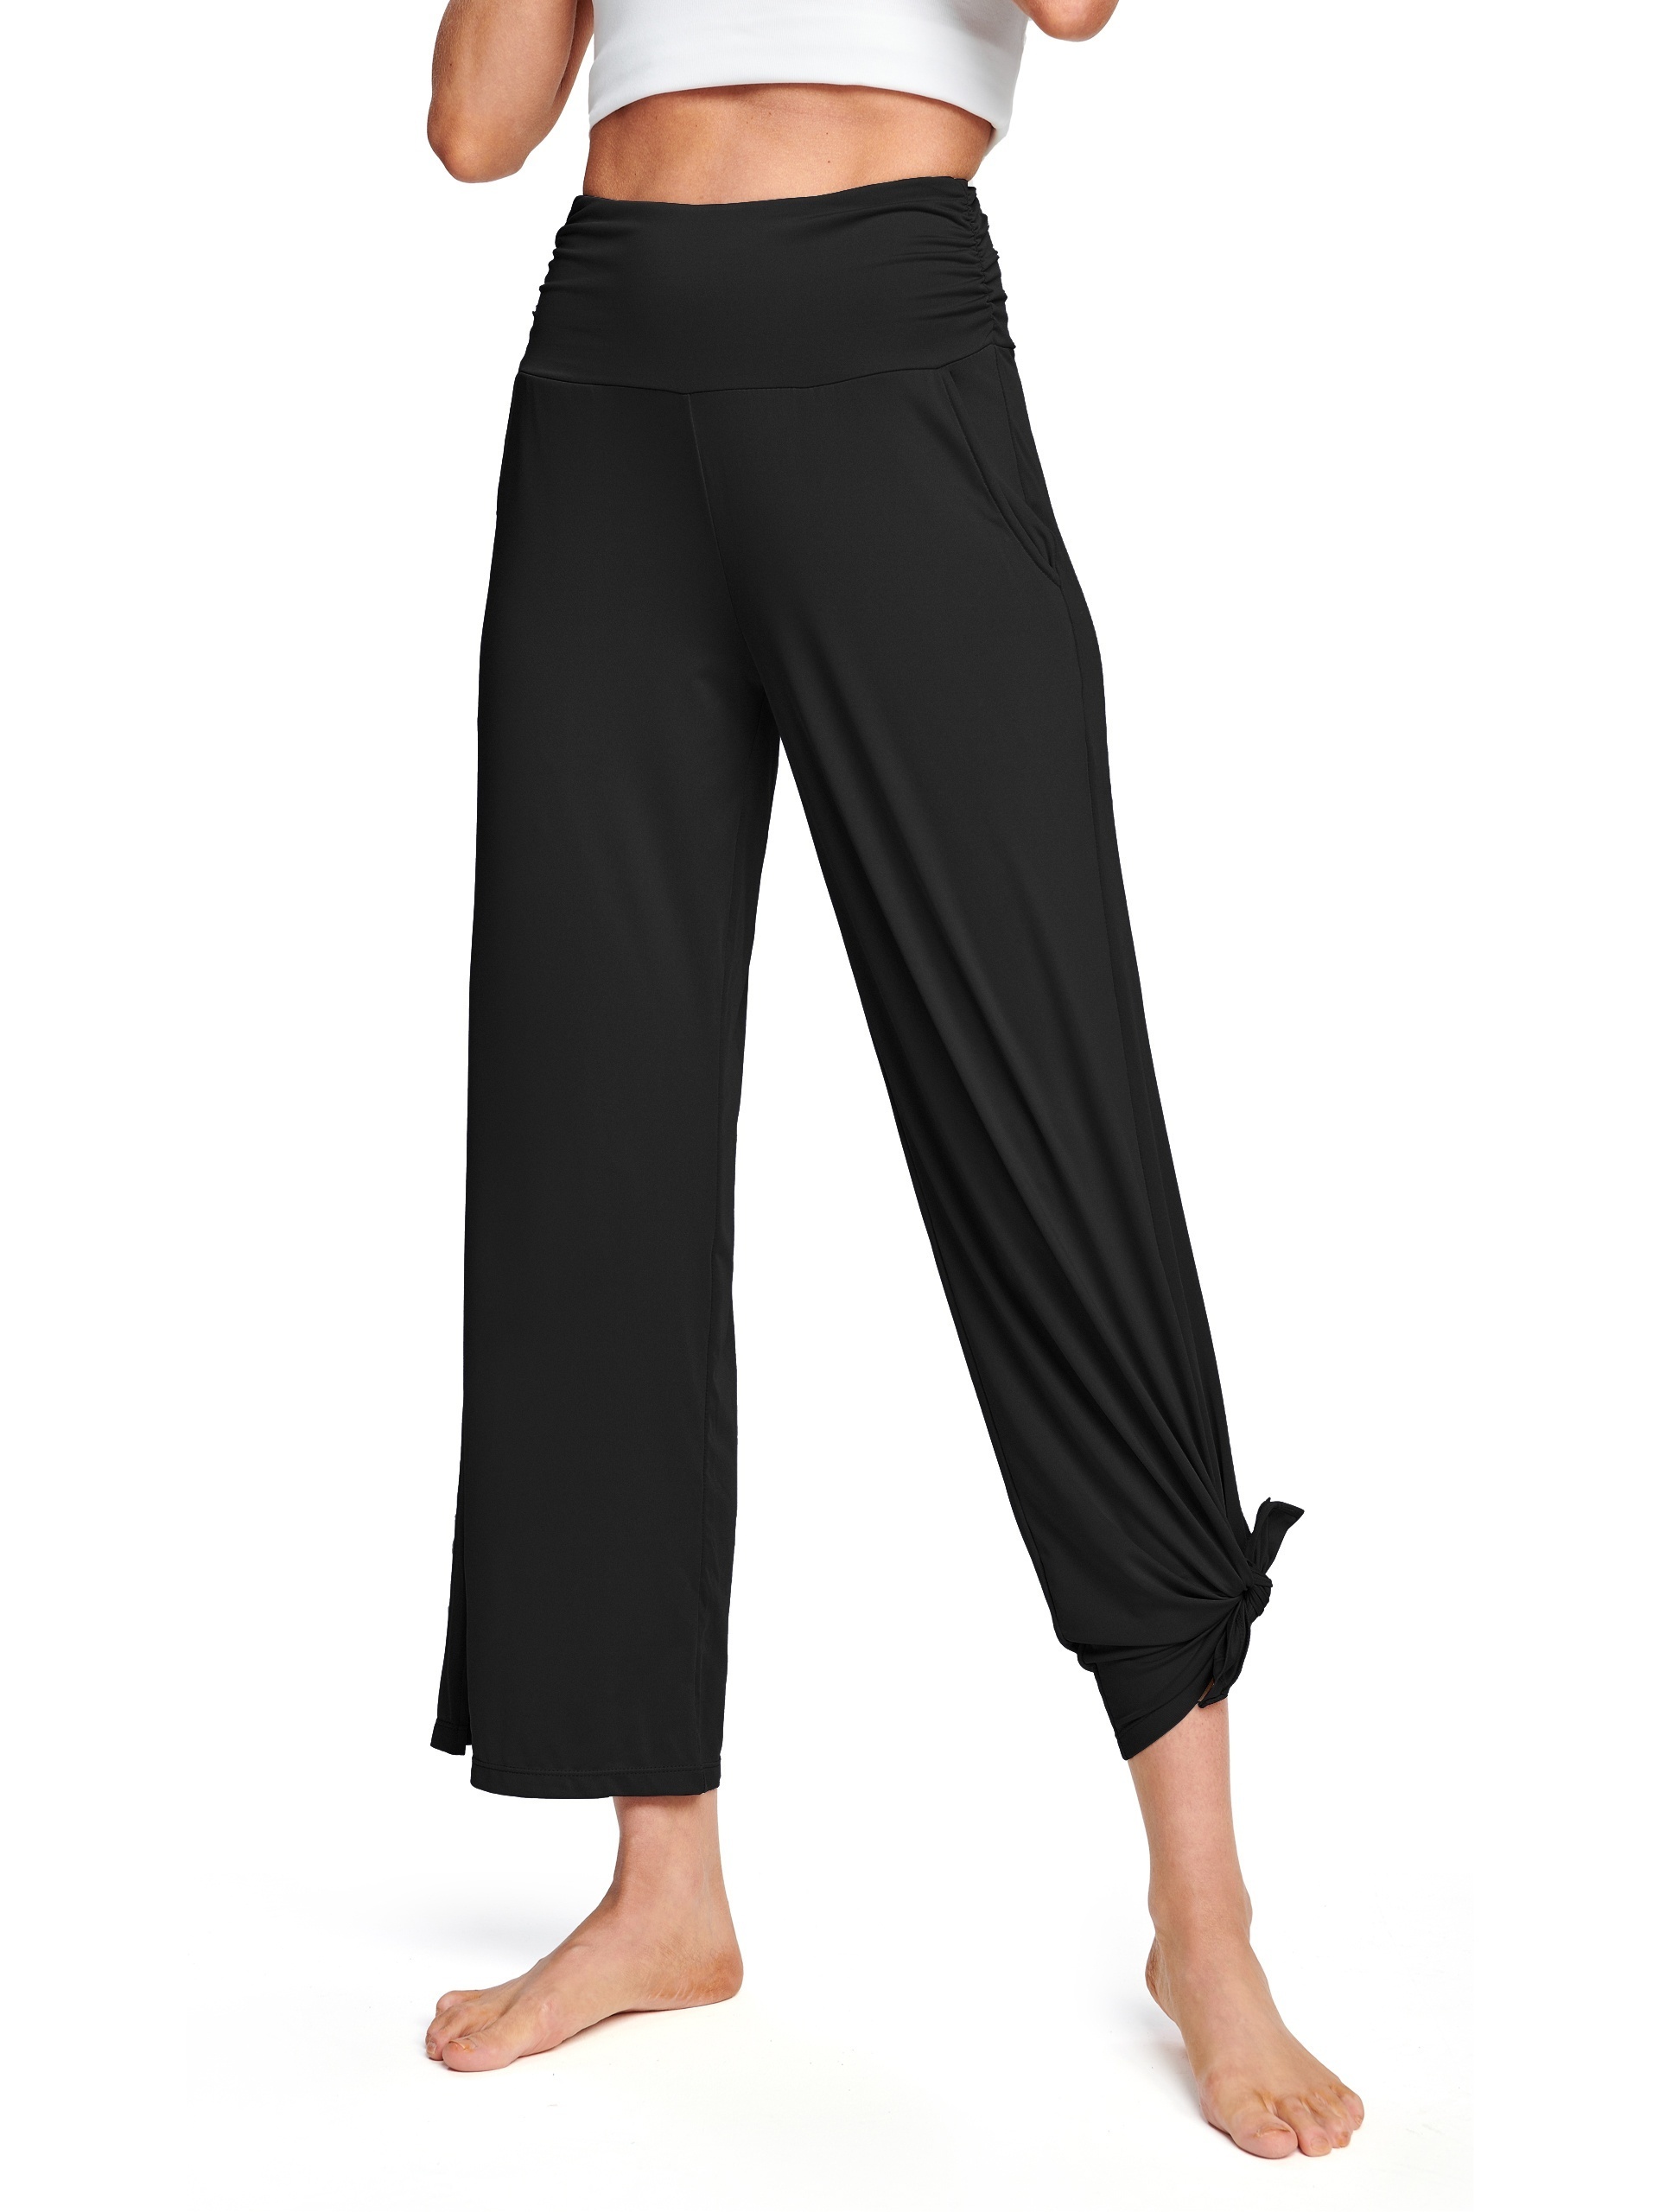 Plain Black Harem Pants Women Comfy Loungewear Loose Yoga Pants